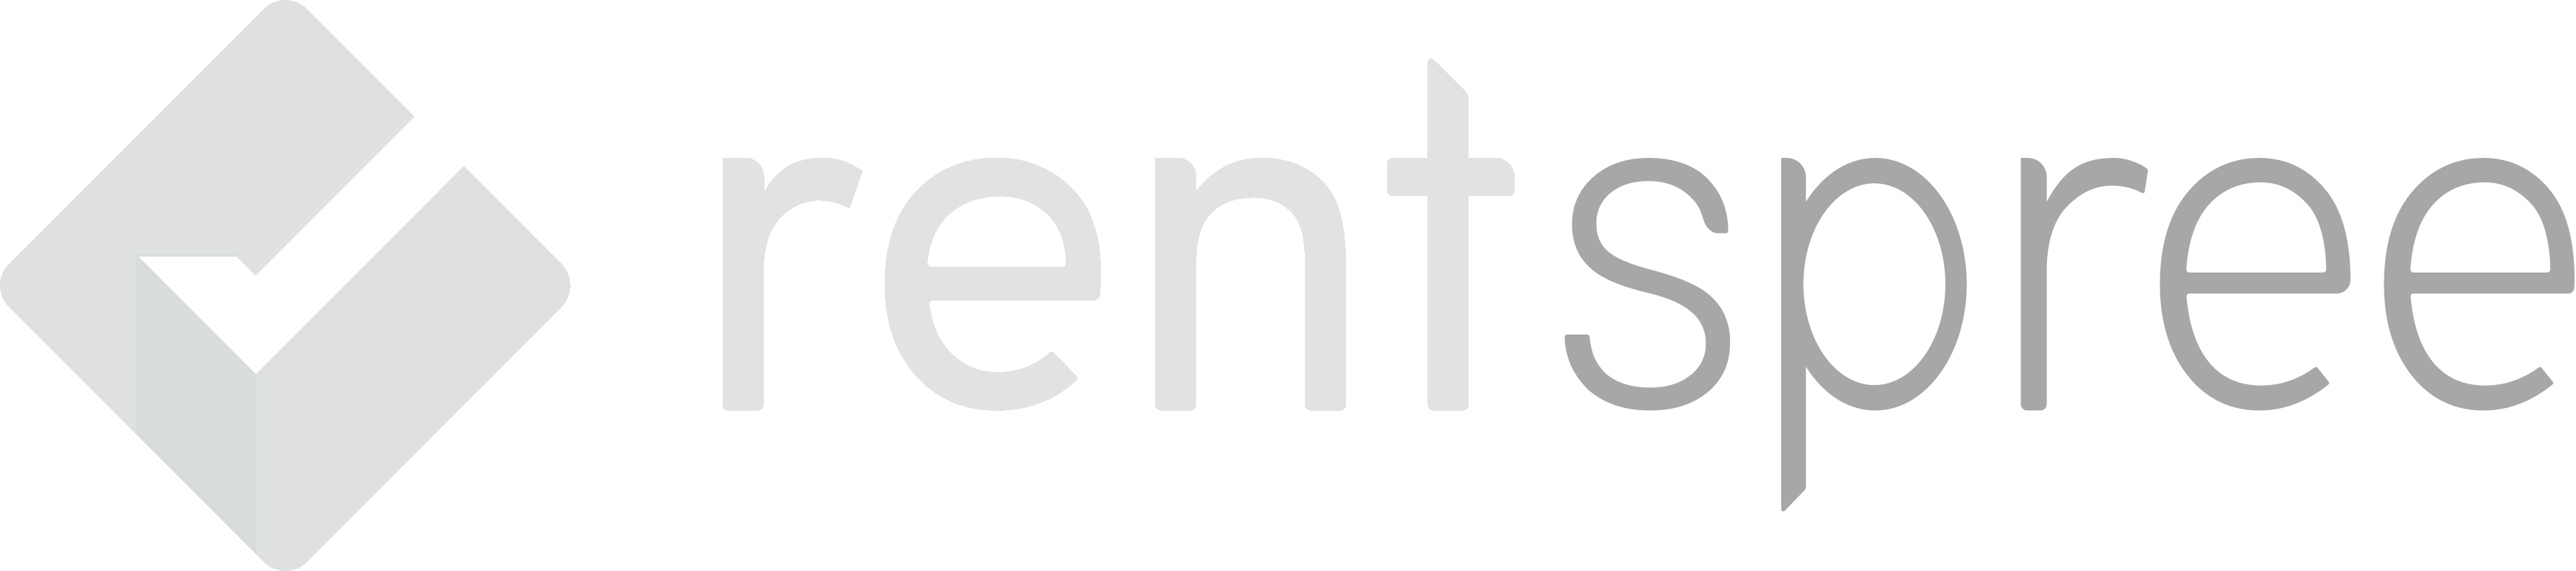 rentspree-logo-grey